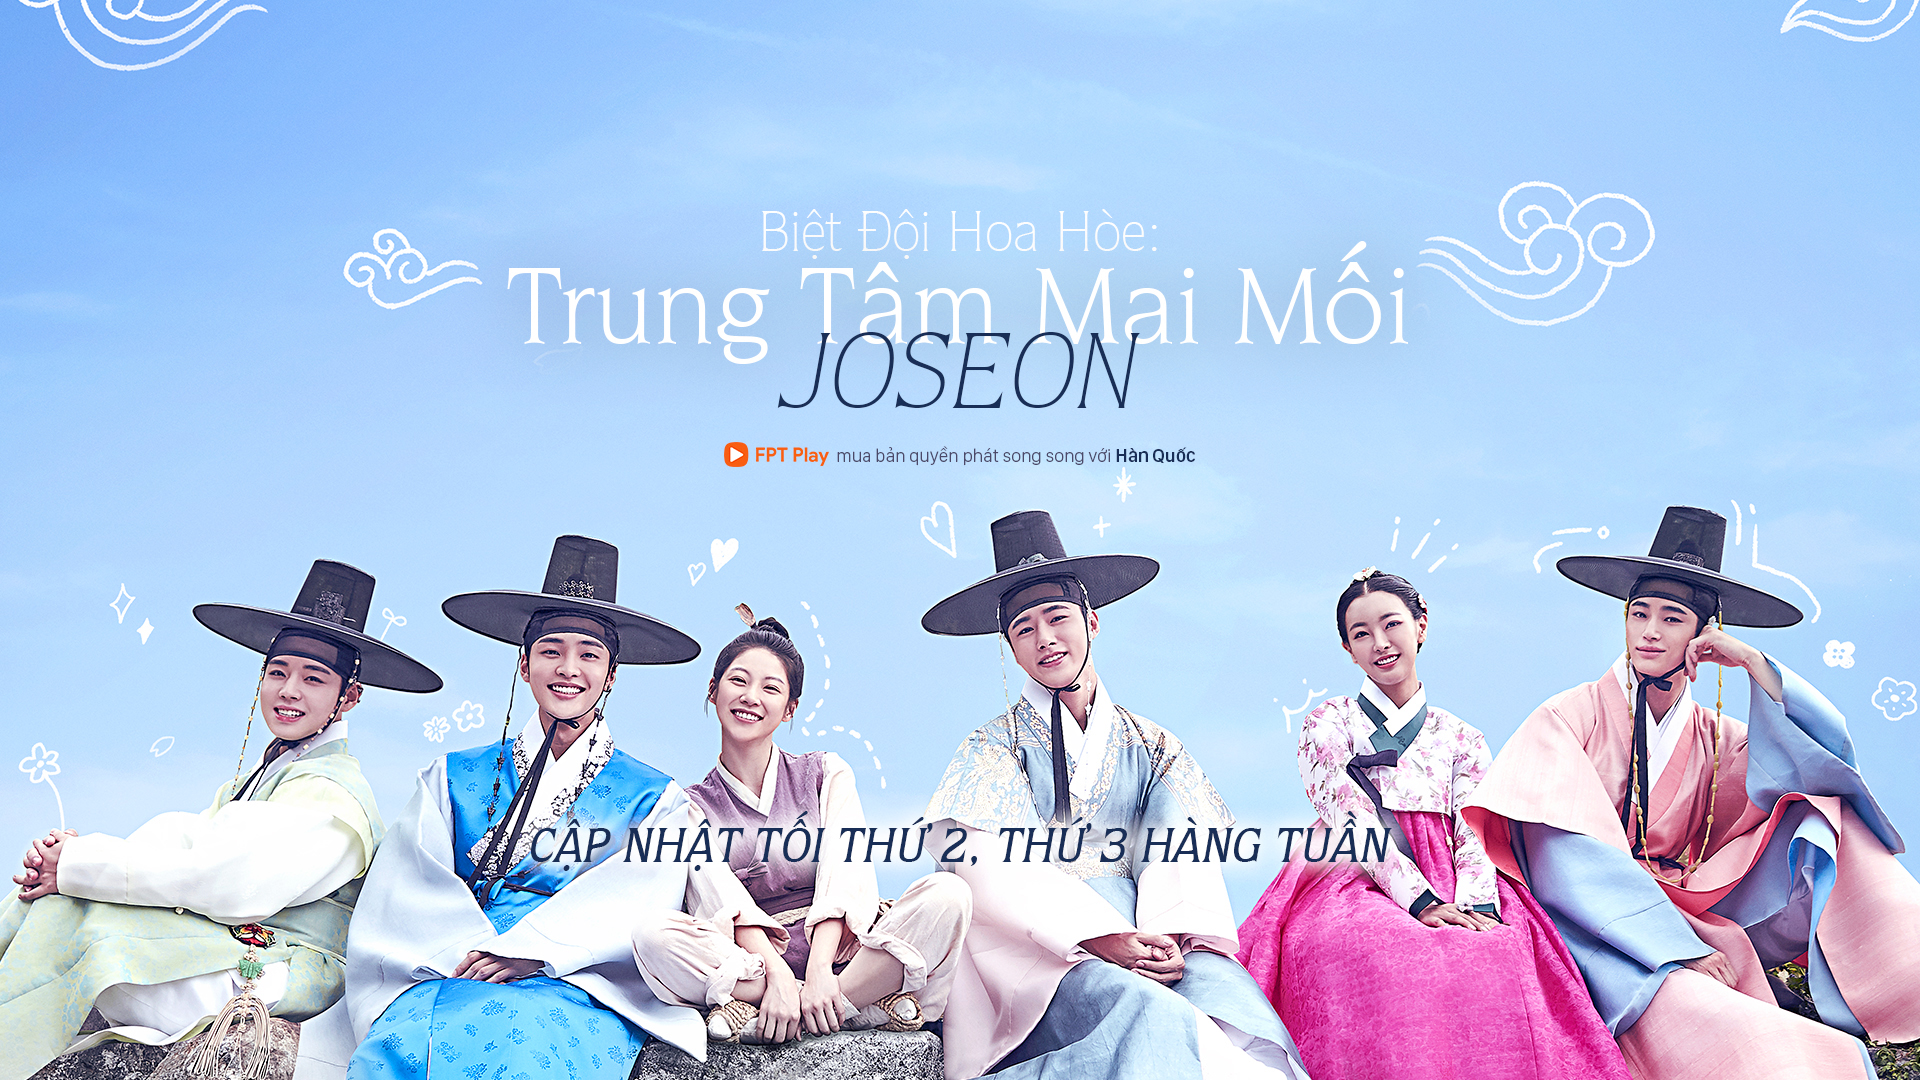 Biệt Đội Hoa Hòe: Trung Tâm Mai Mối Joseon - Flower Crew Joseon Marriage Agency